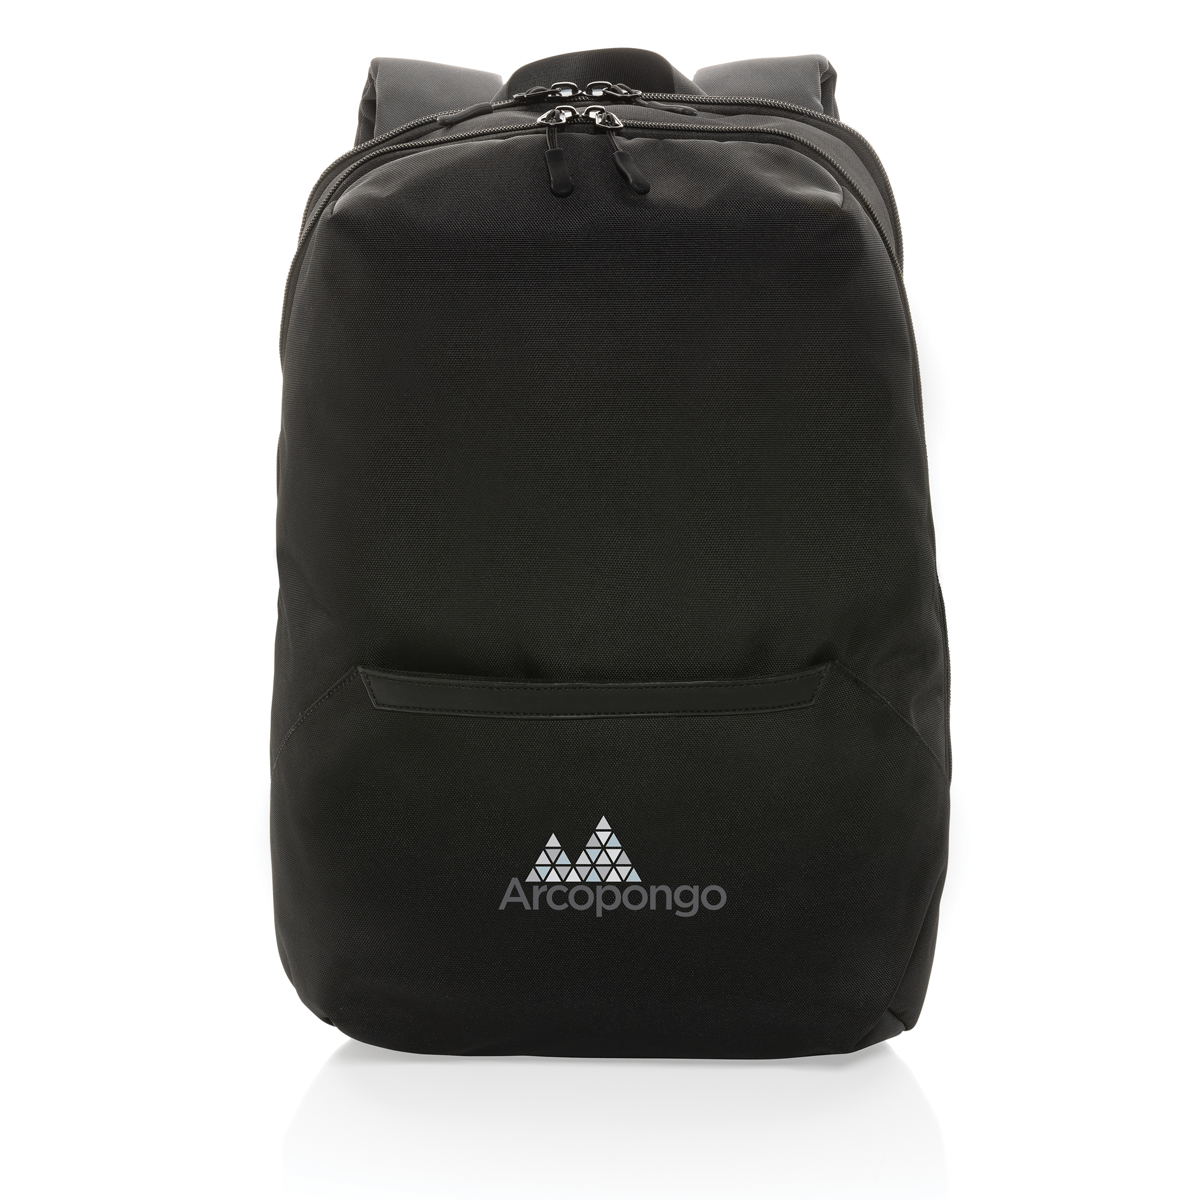 Рюкзак для ноутбука Impact из rPET AWARE 1200D, 15.6''